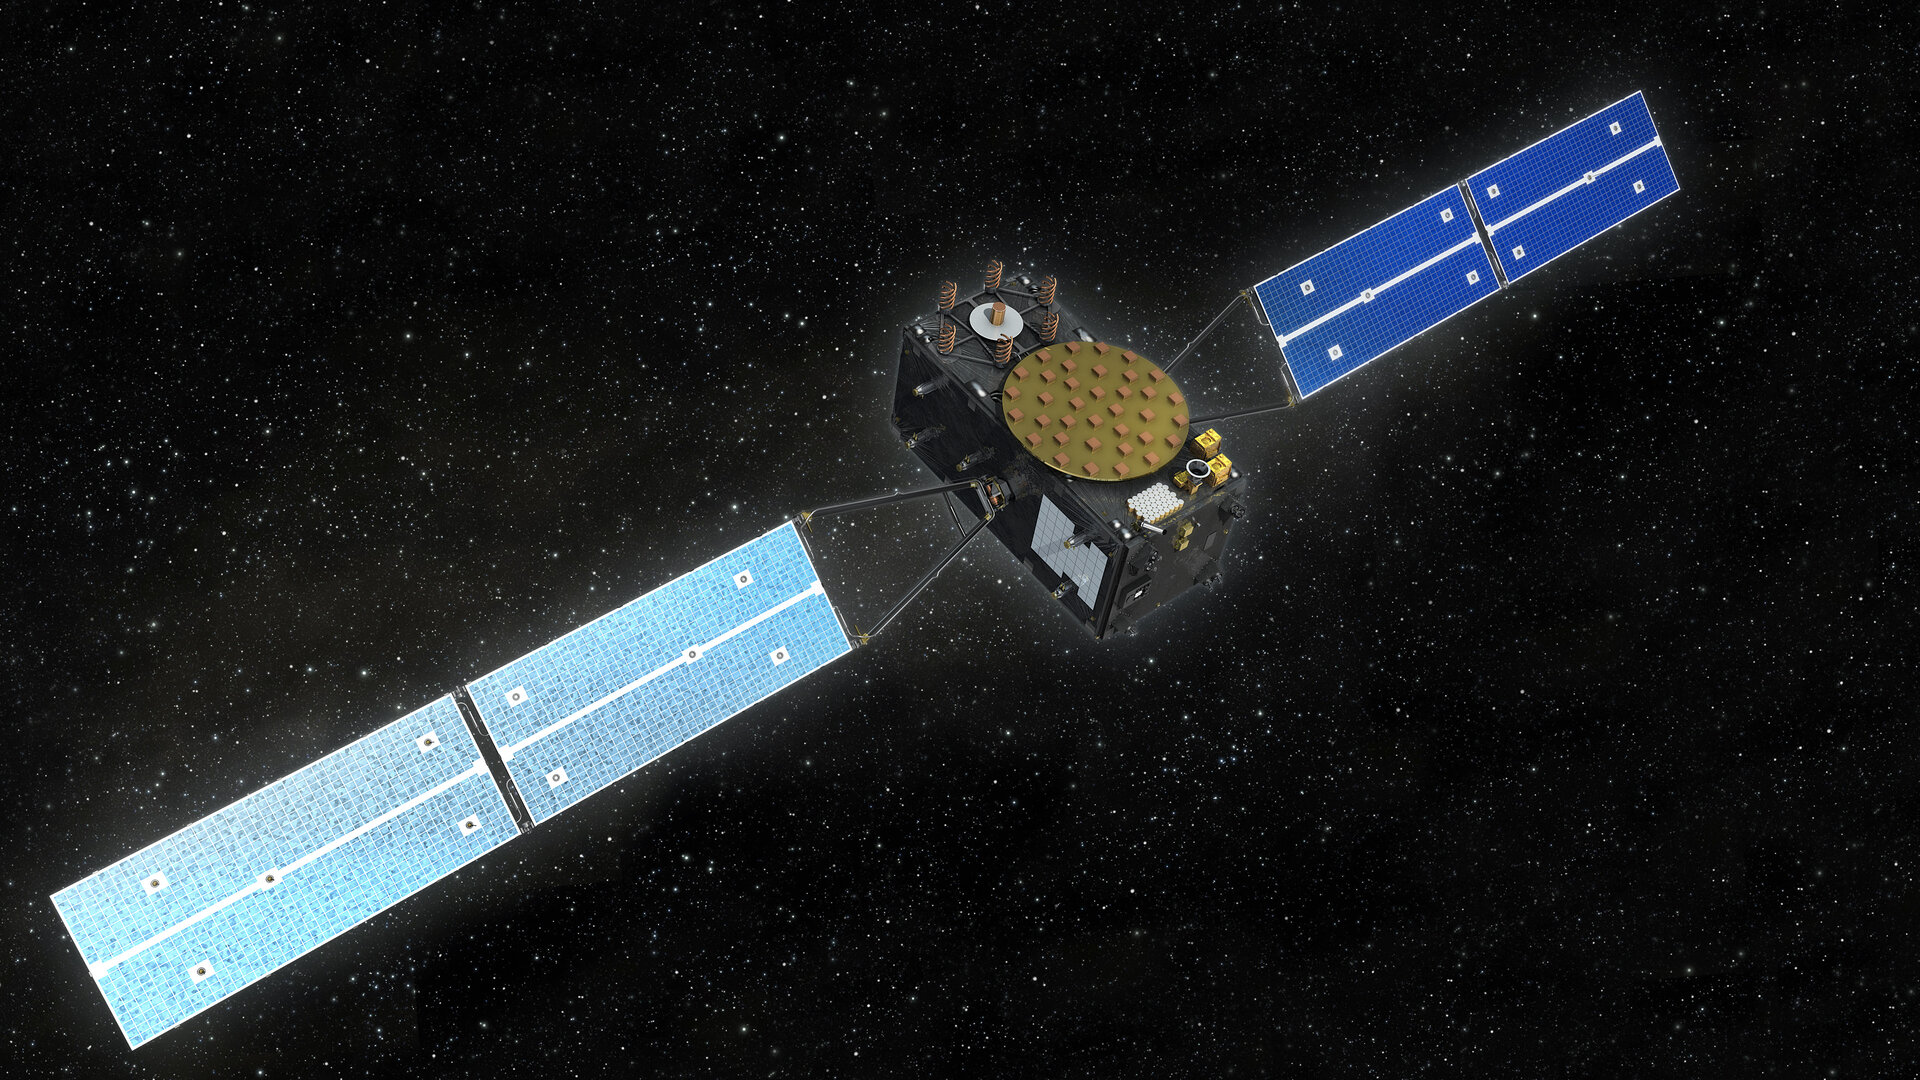 OHB-designed Galileo satellite